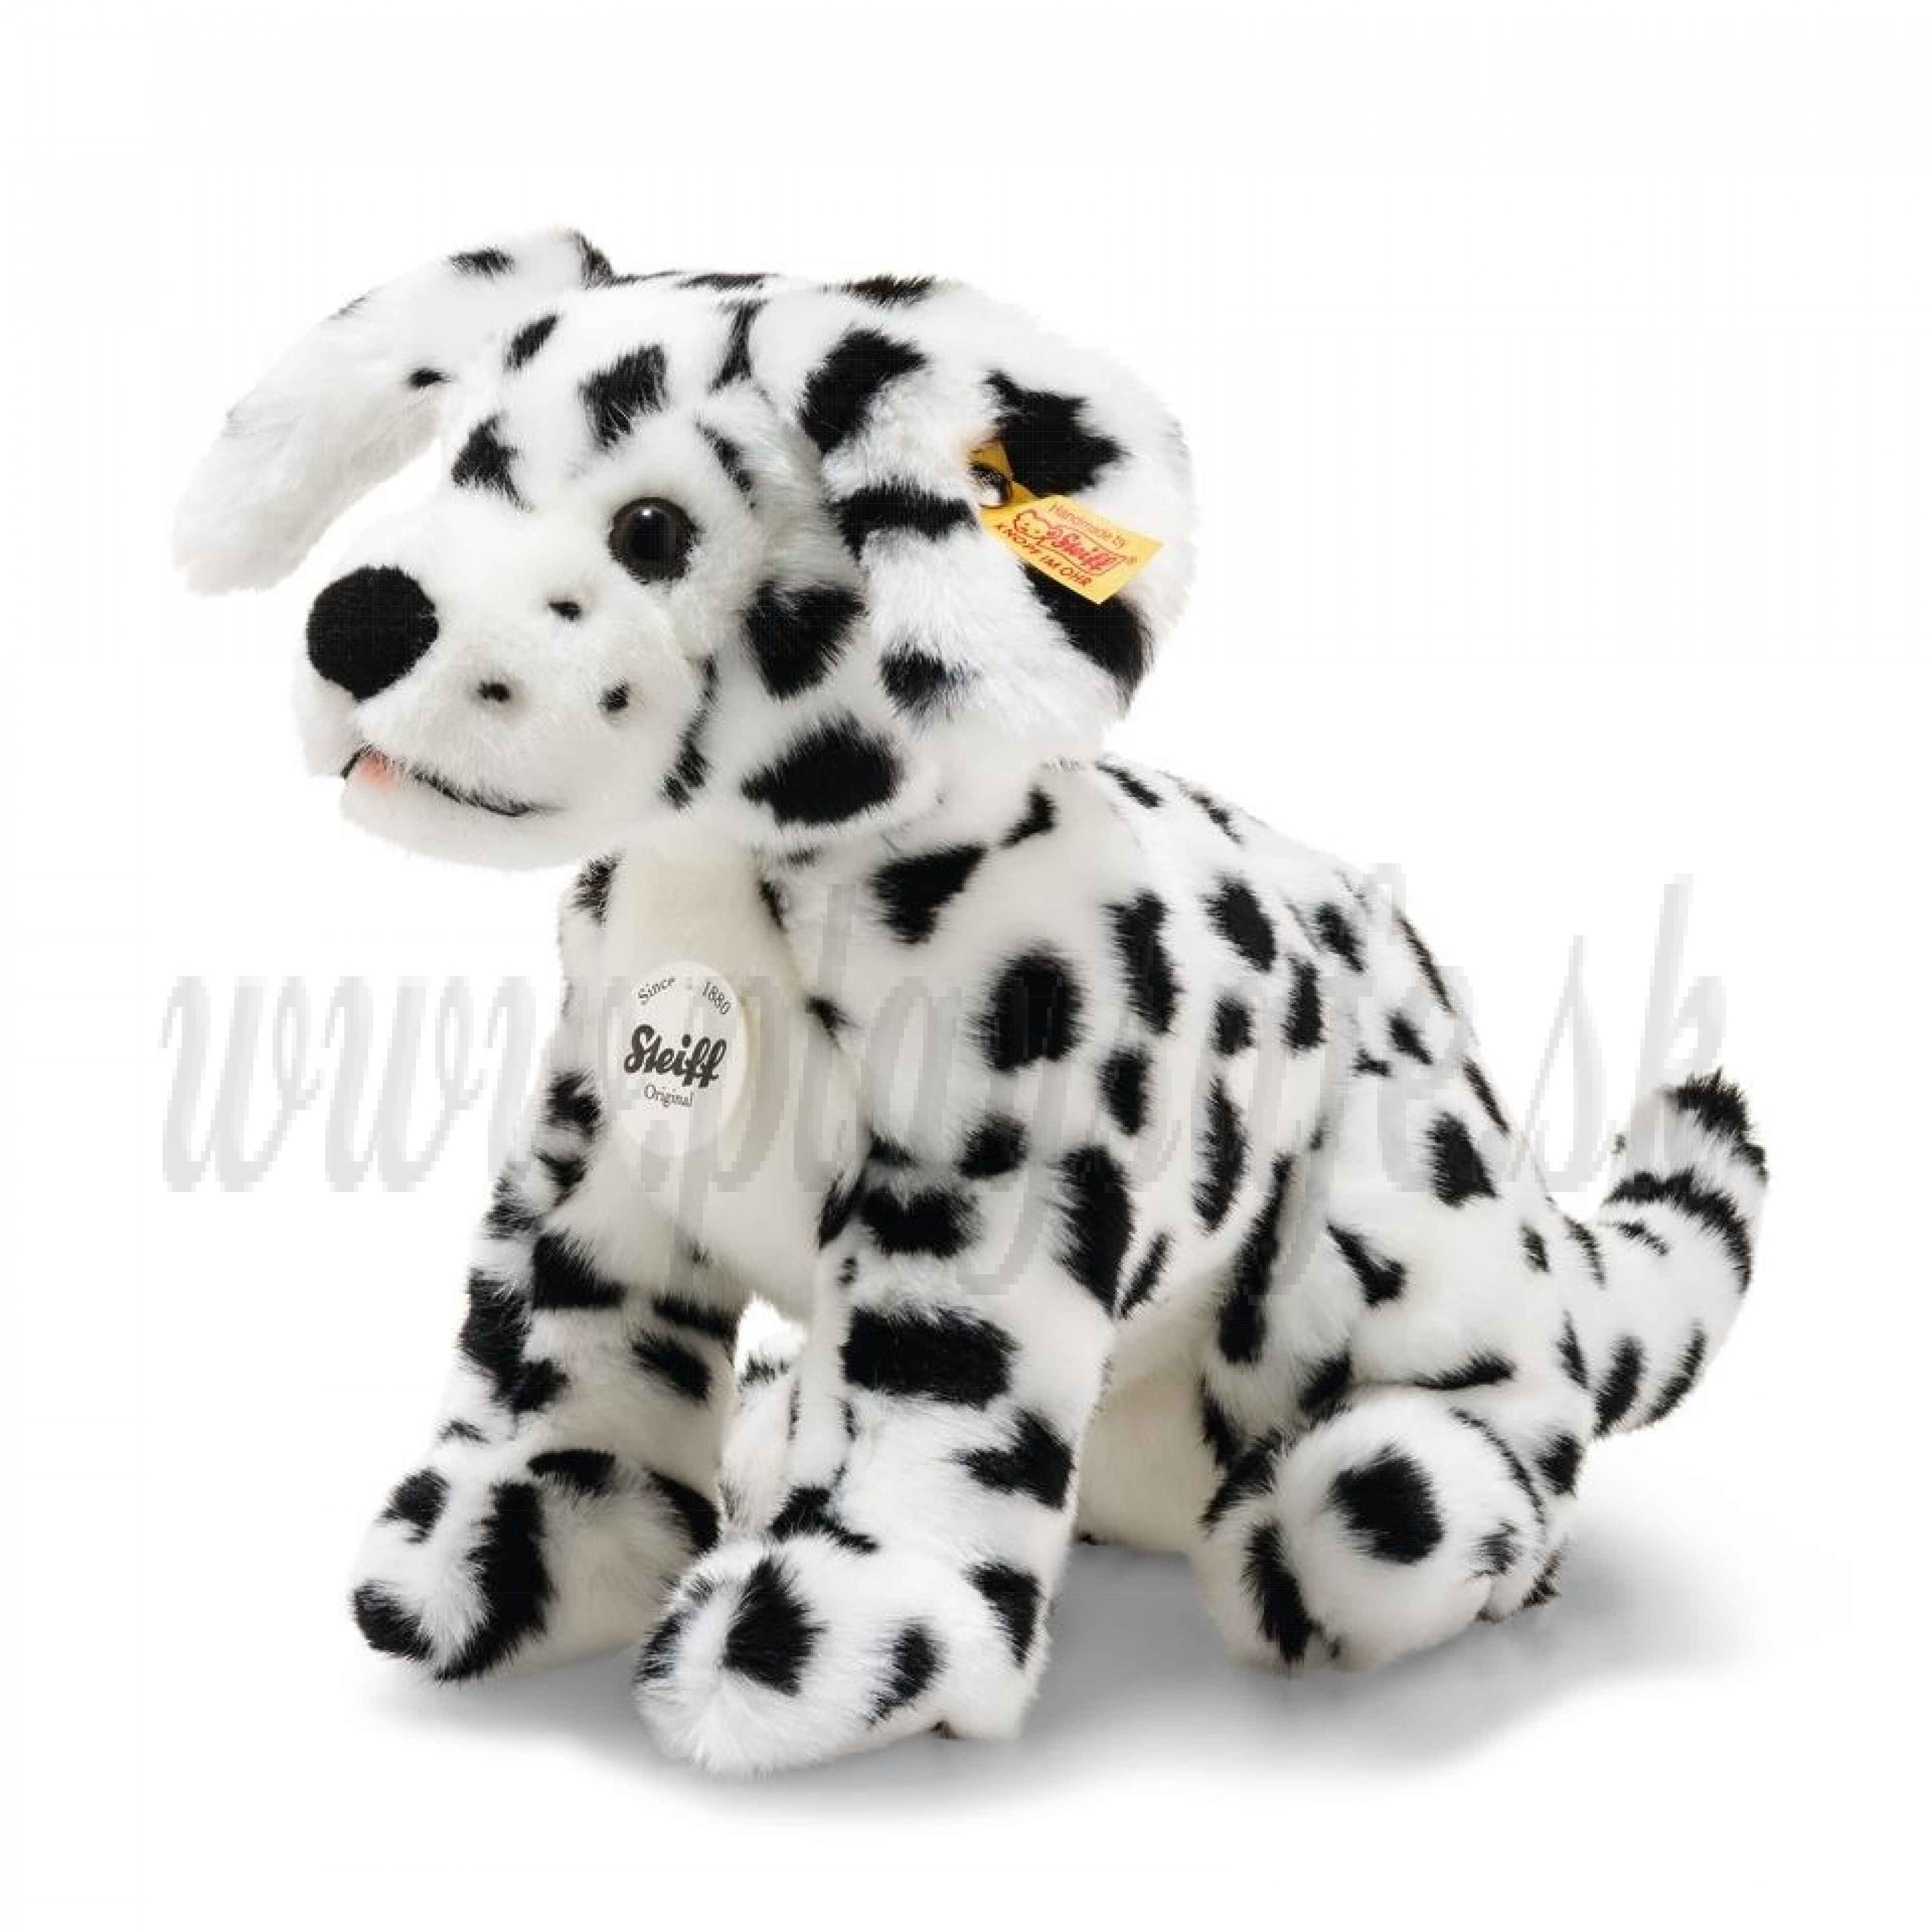 Steiff Soft toy dog Dalmatian Lupi, 26cm